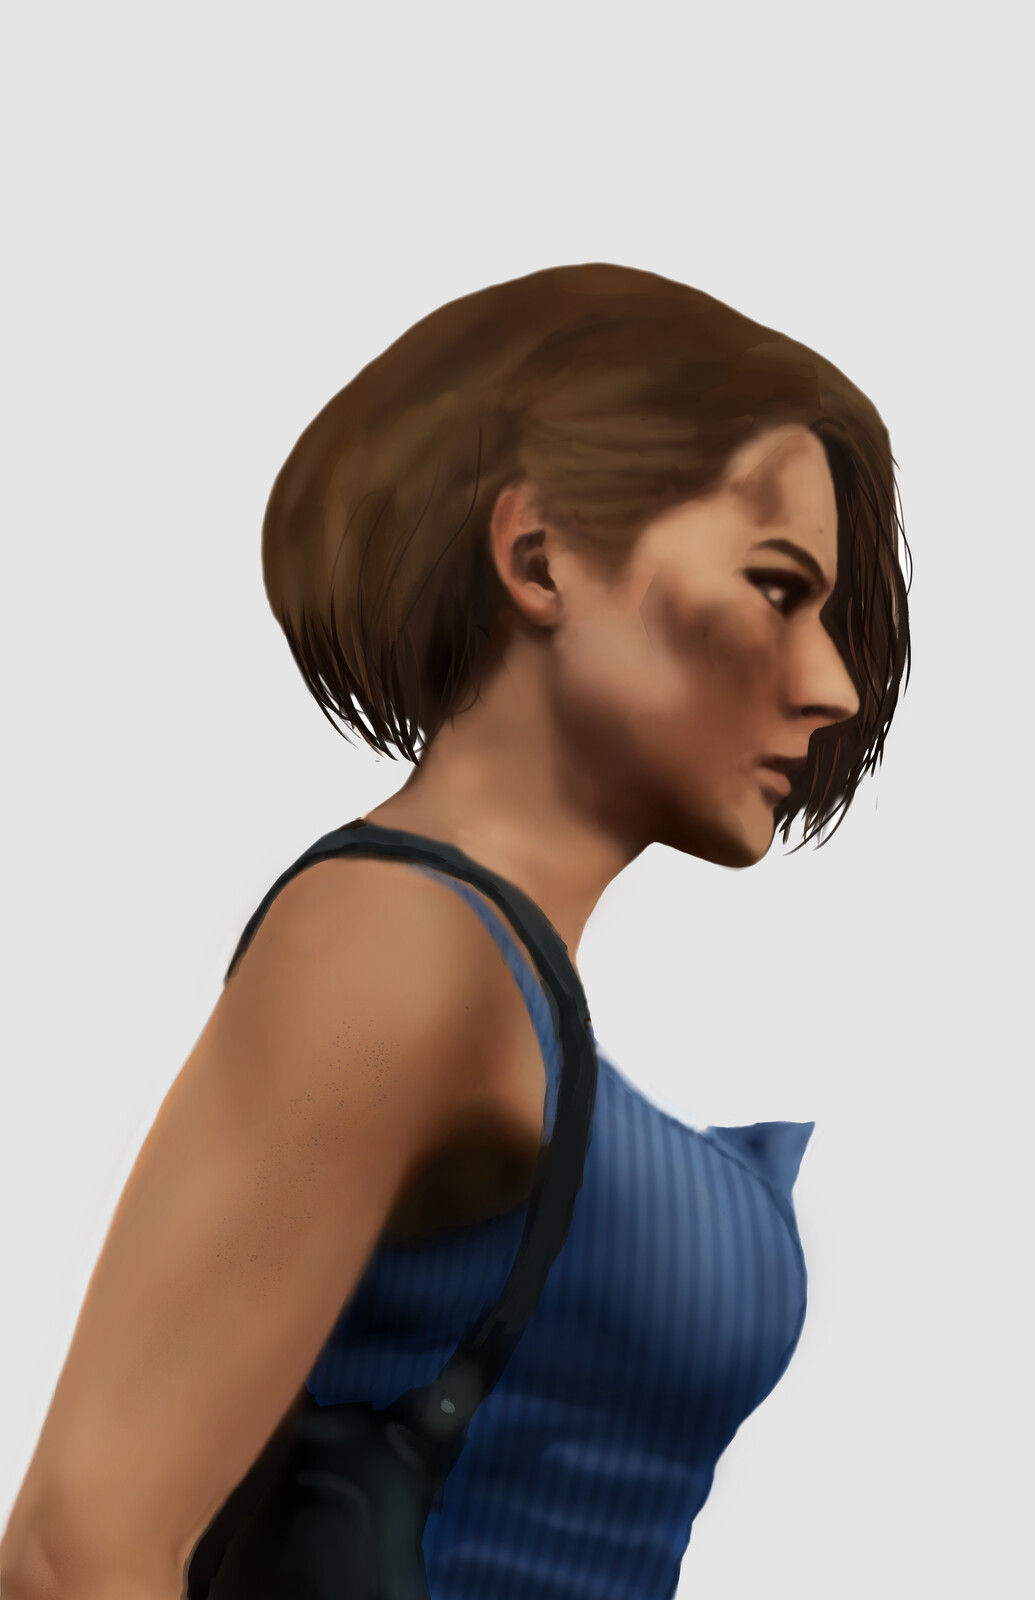 Jill Valentine Portrait Cover (Resident Evil 3 Remake) .